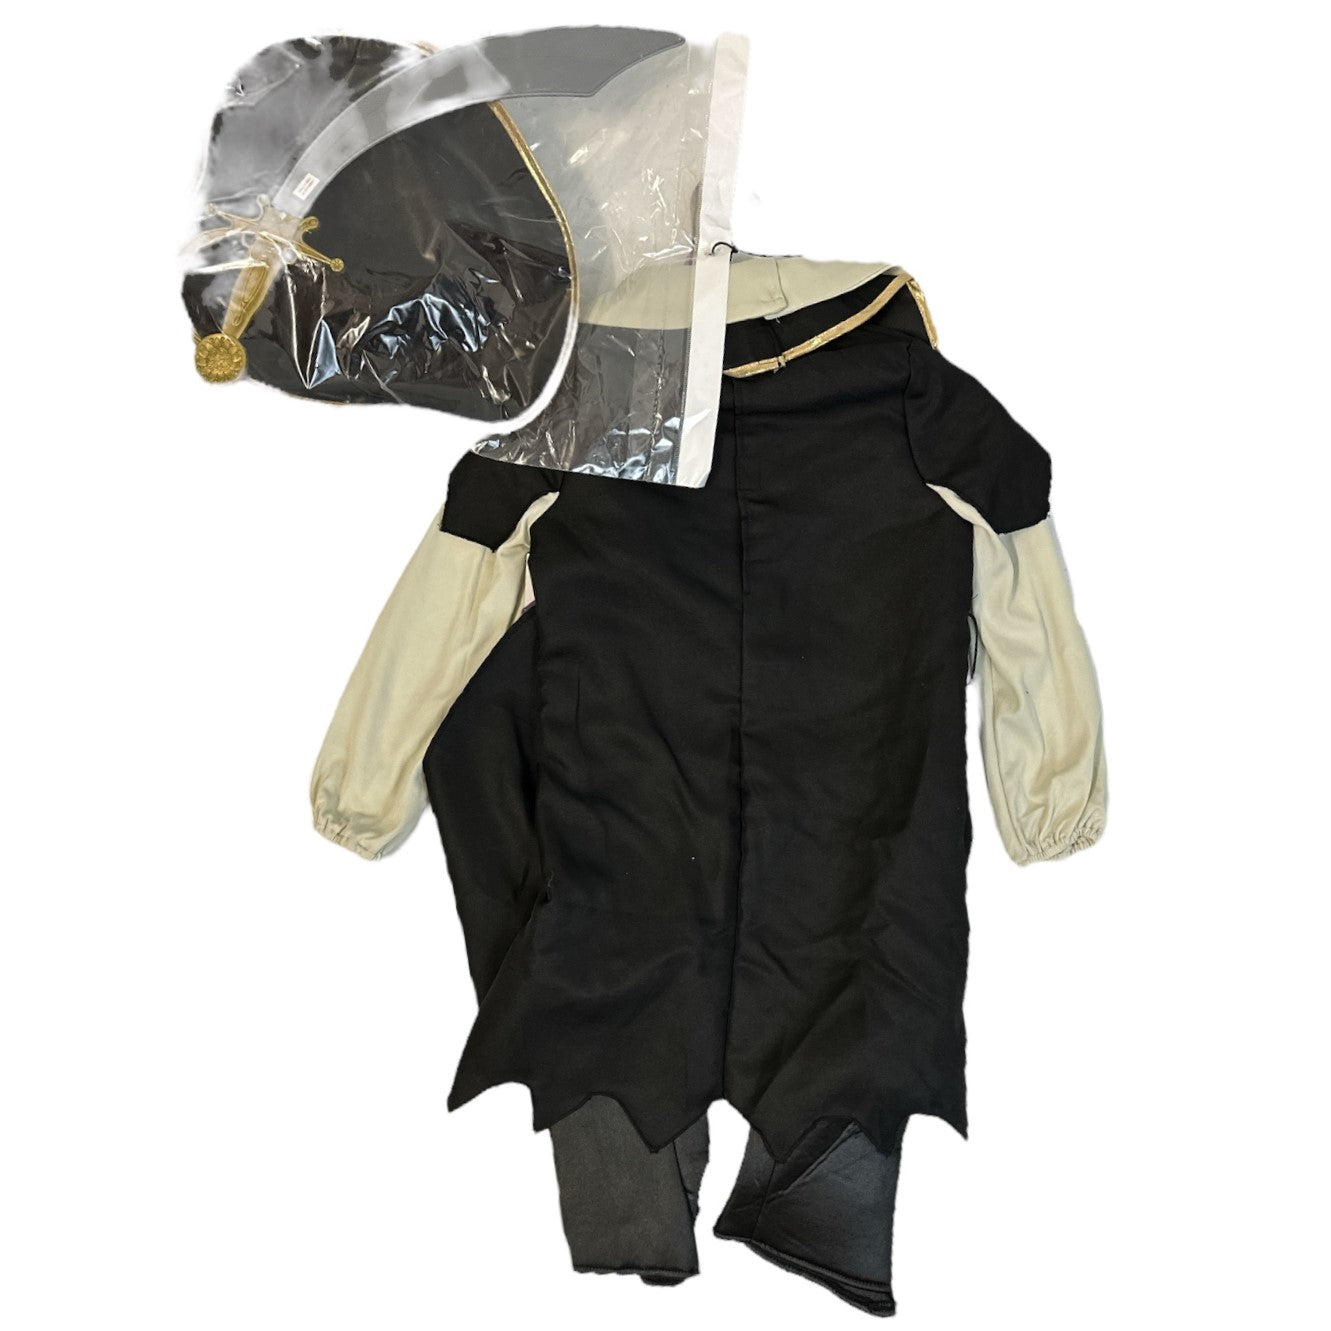 Disguise Unisex Kid's Pirate Halloween/Dress-Up Costume